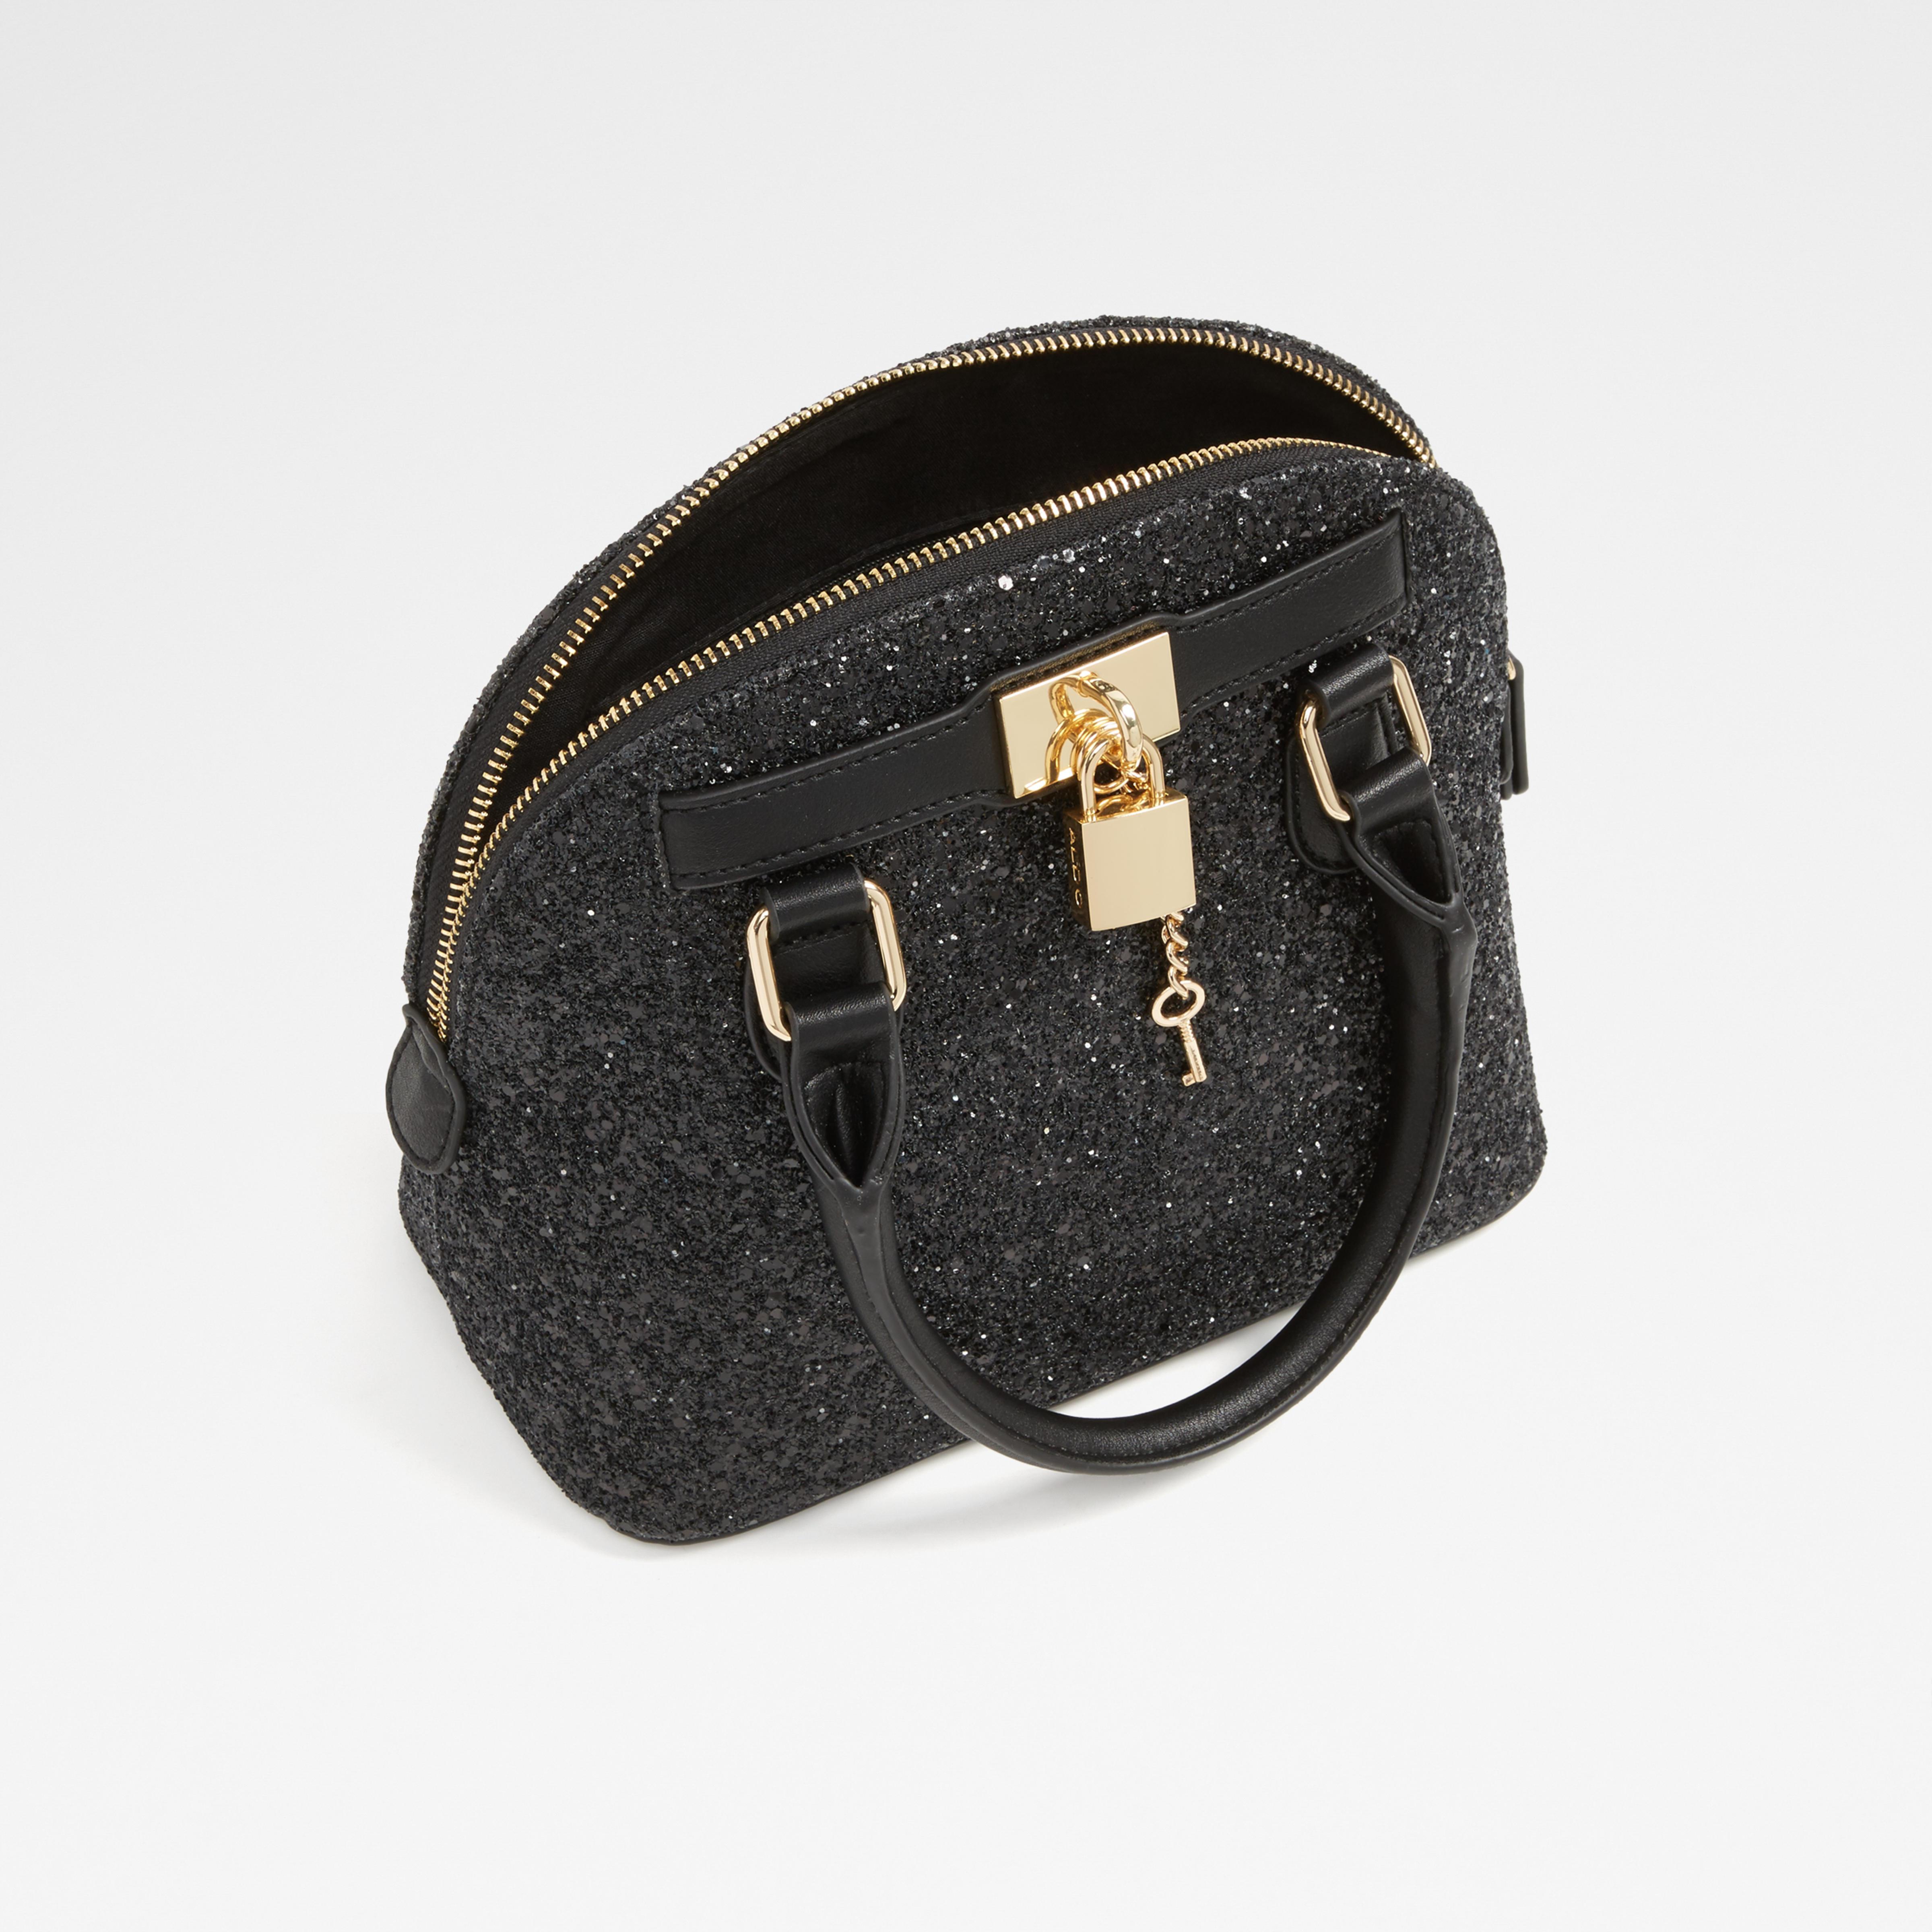 Aldo gold glitter handbag - Bags and purses